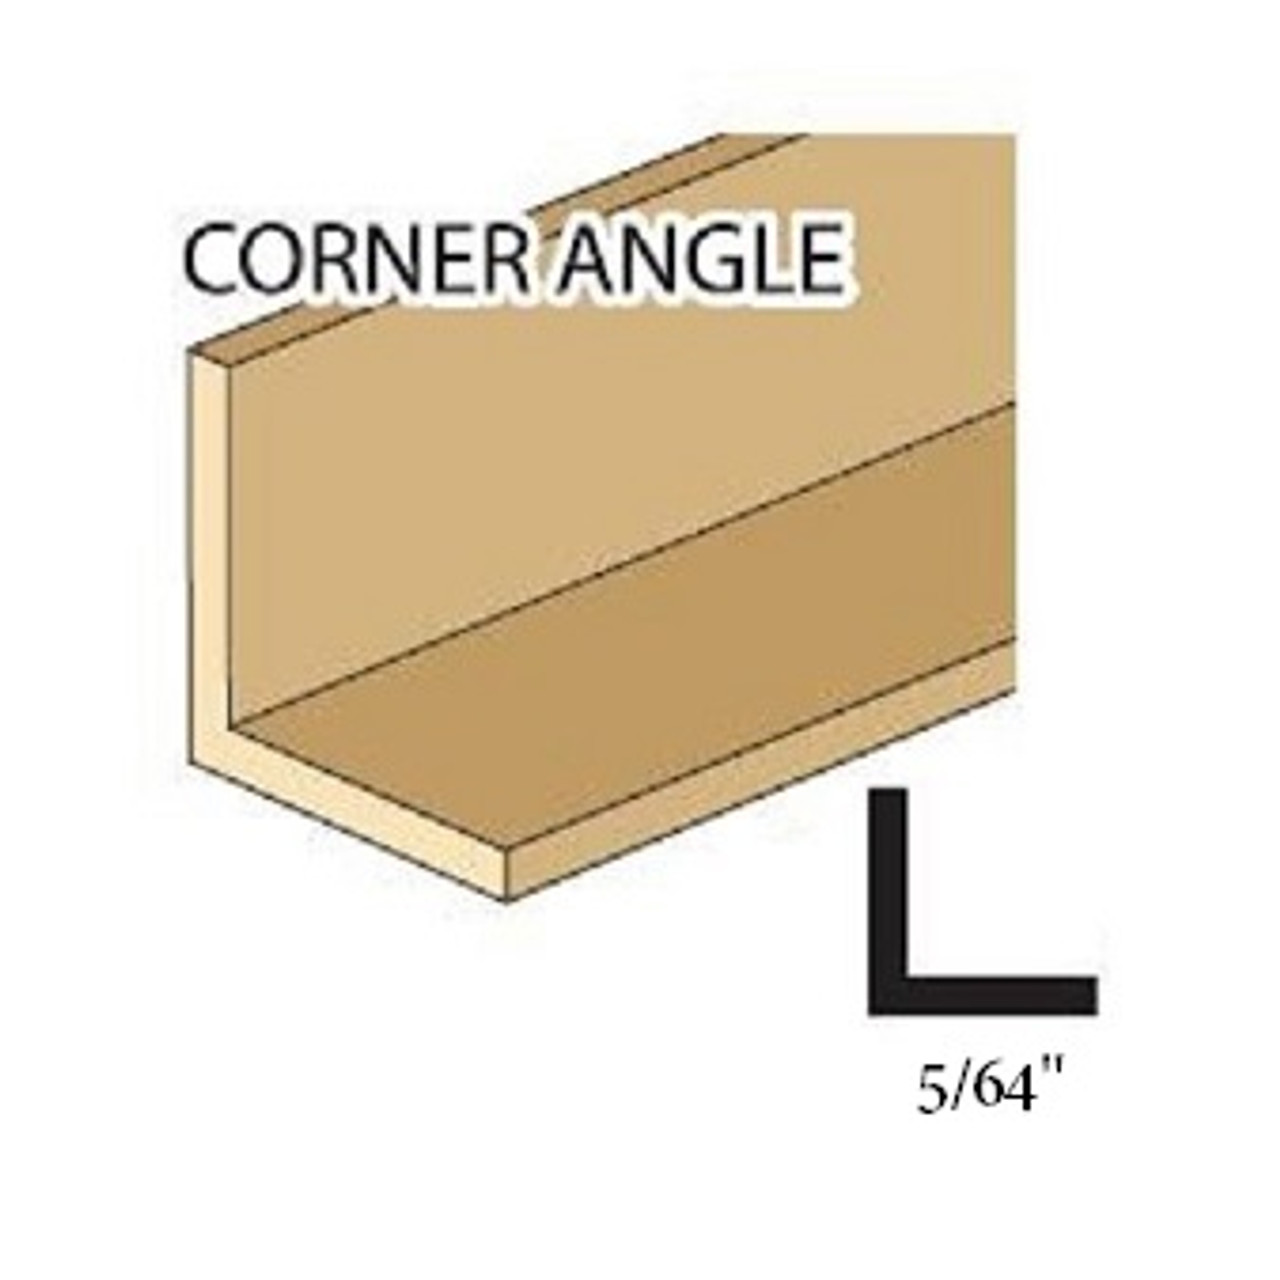 Illustrated image of 5/64" corner angle wood trim